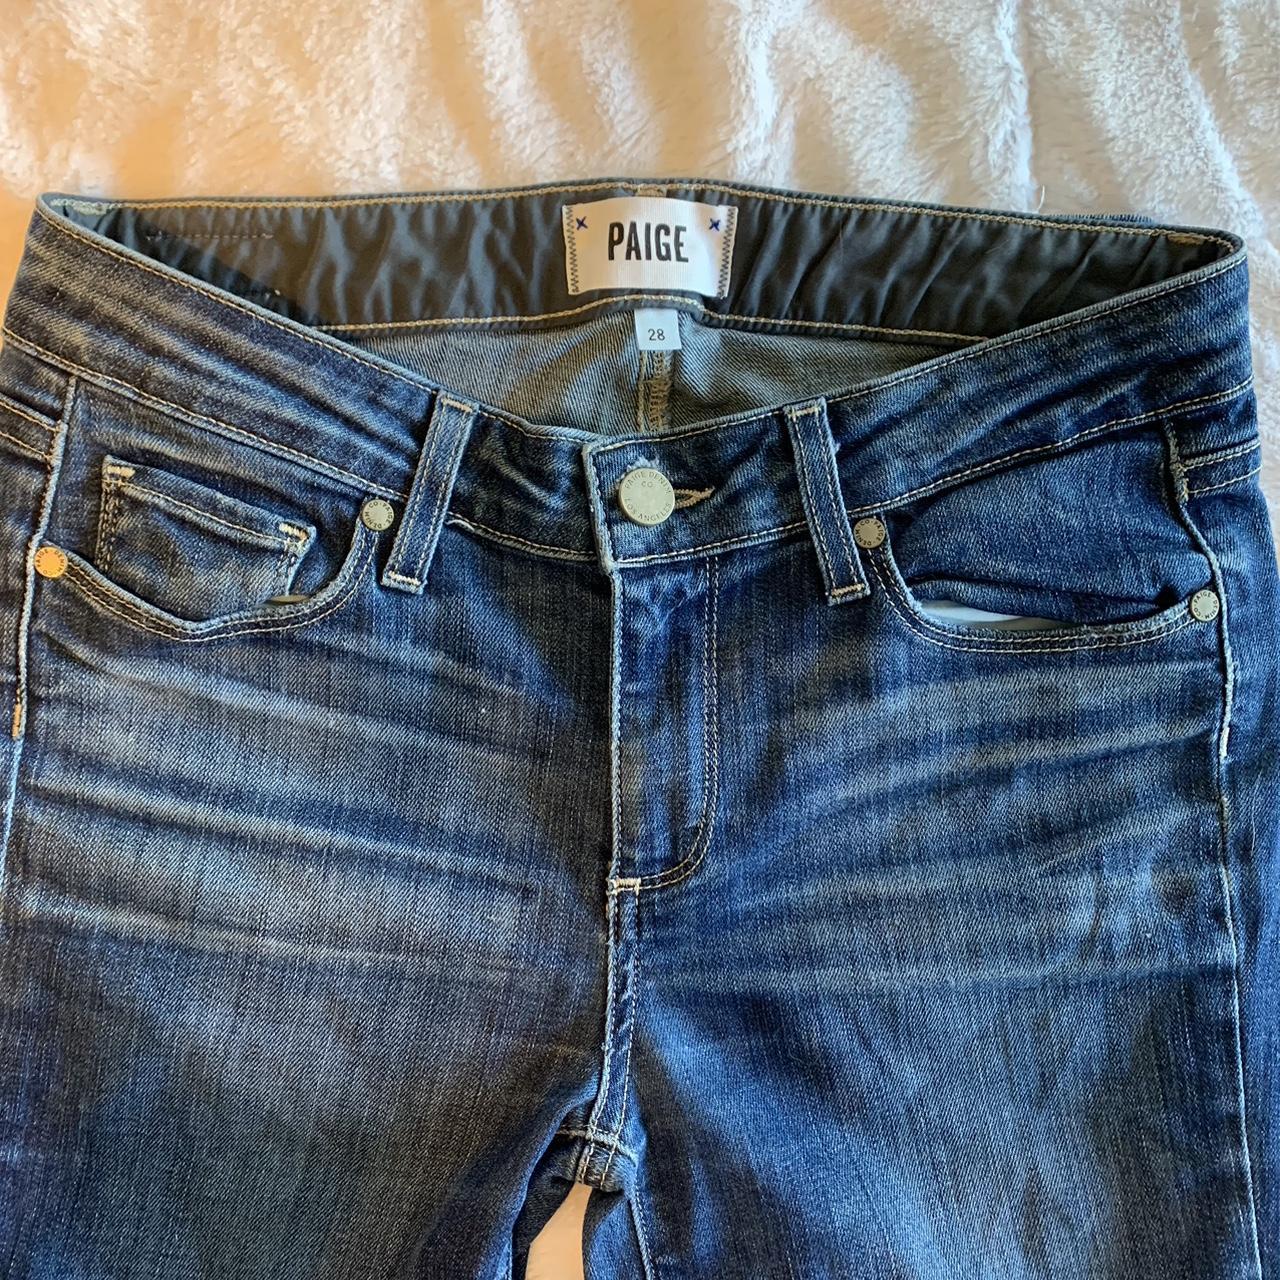 Paige jeans, super soft, barely worn, size 28 - Depop